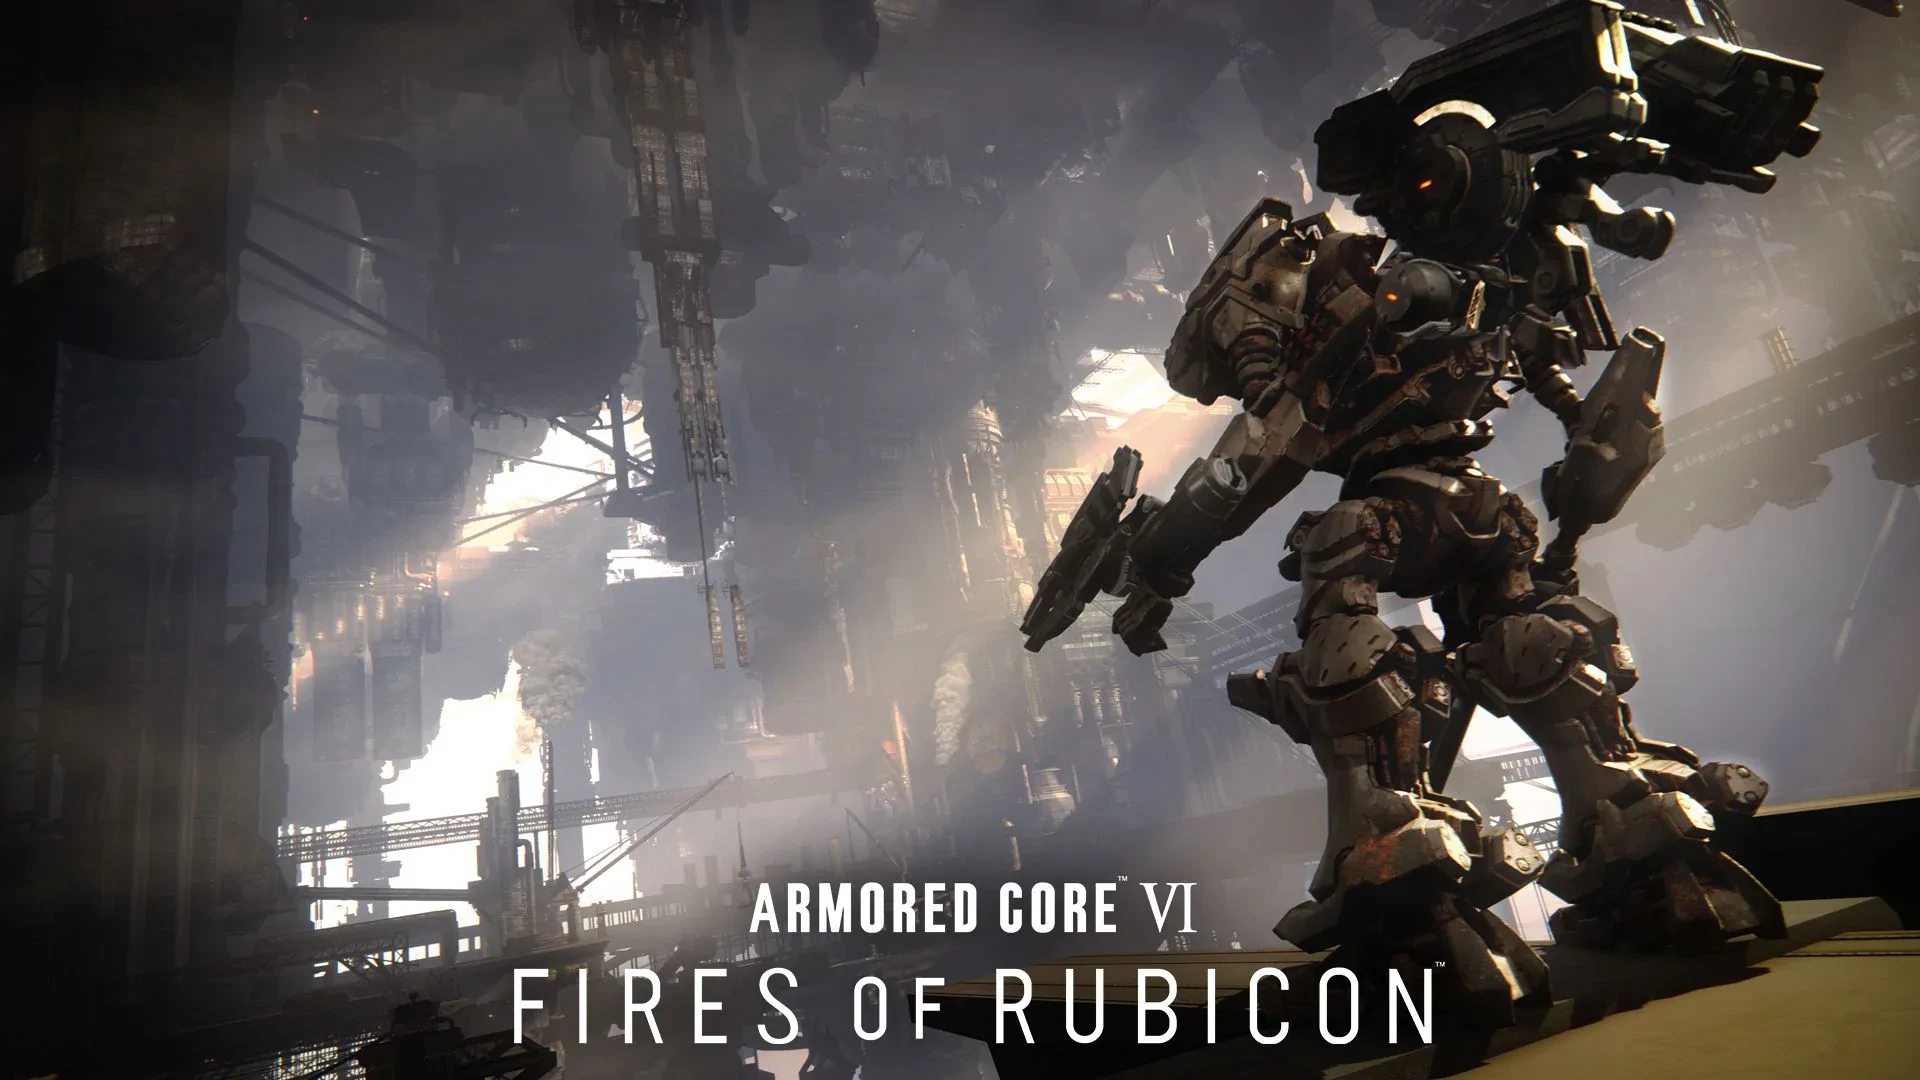 Armored Core VI: Fires of Rubicon - recenzja gry. Kolejny hit twórców Elden Ring!